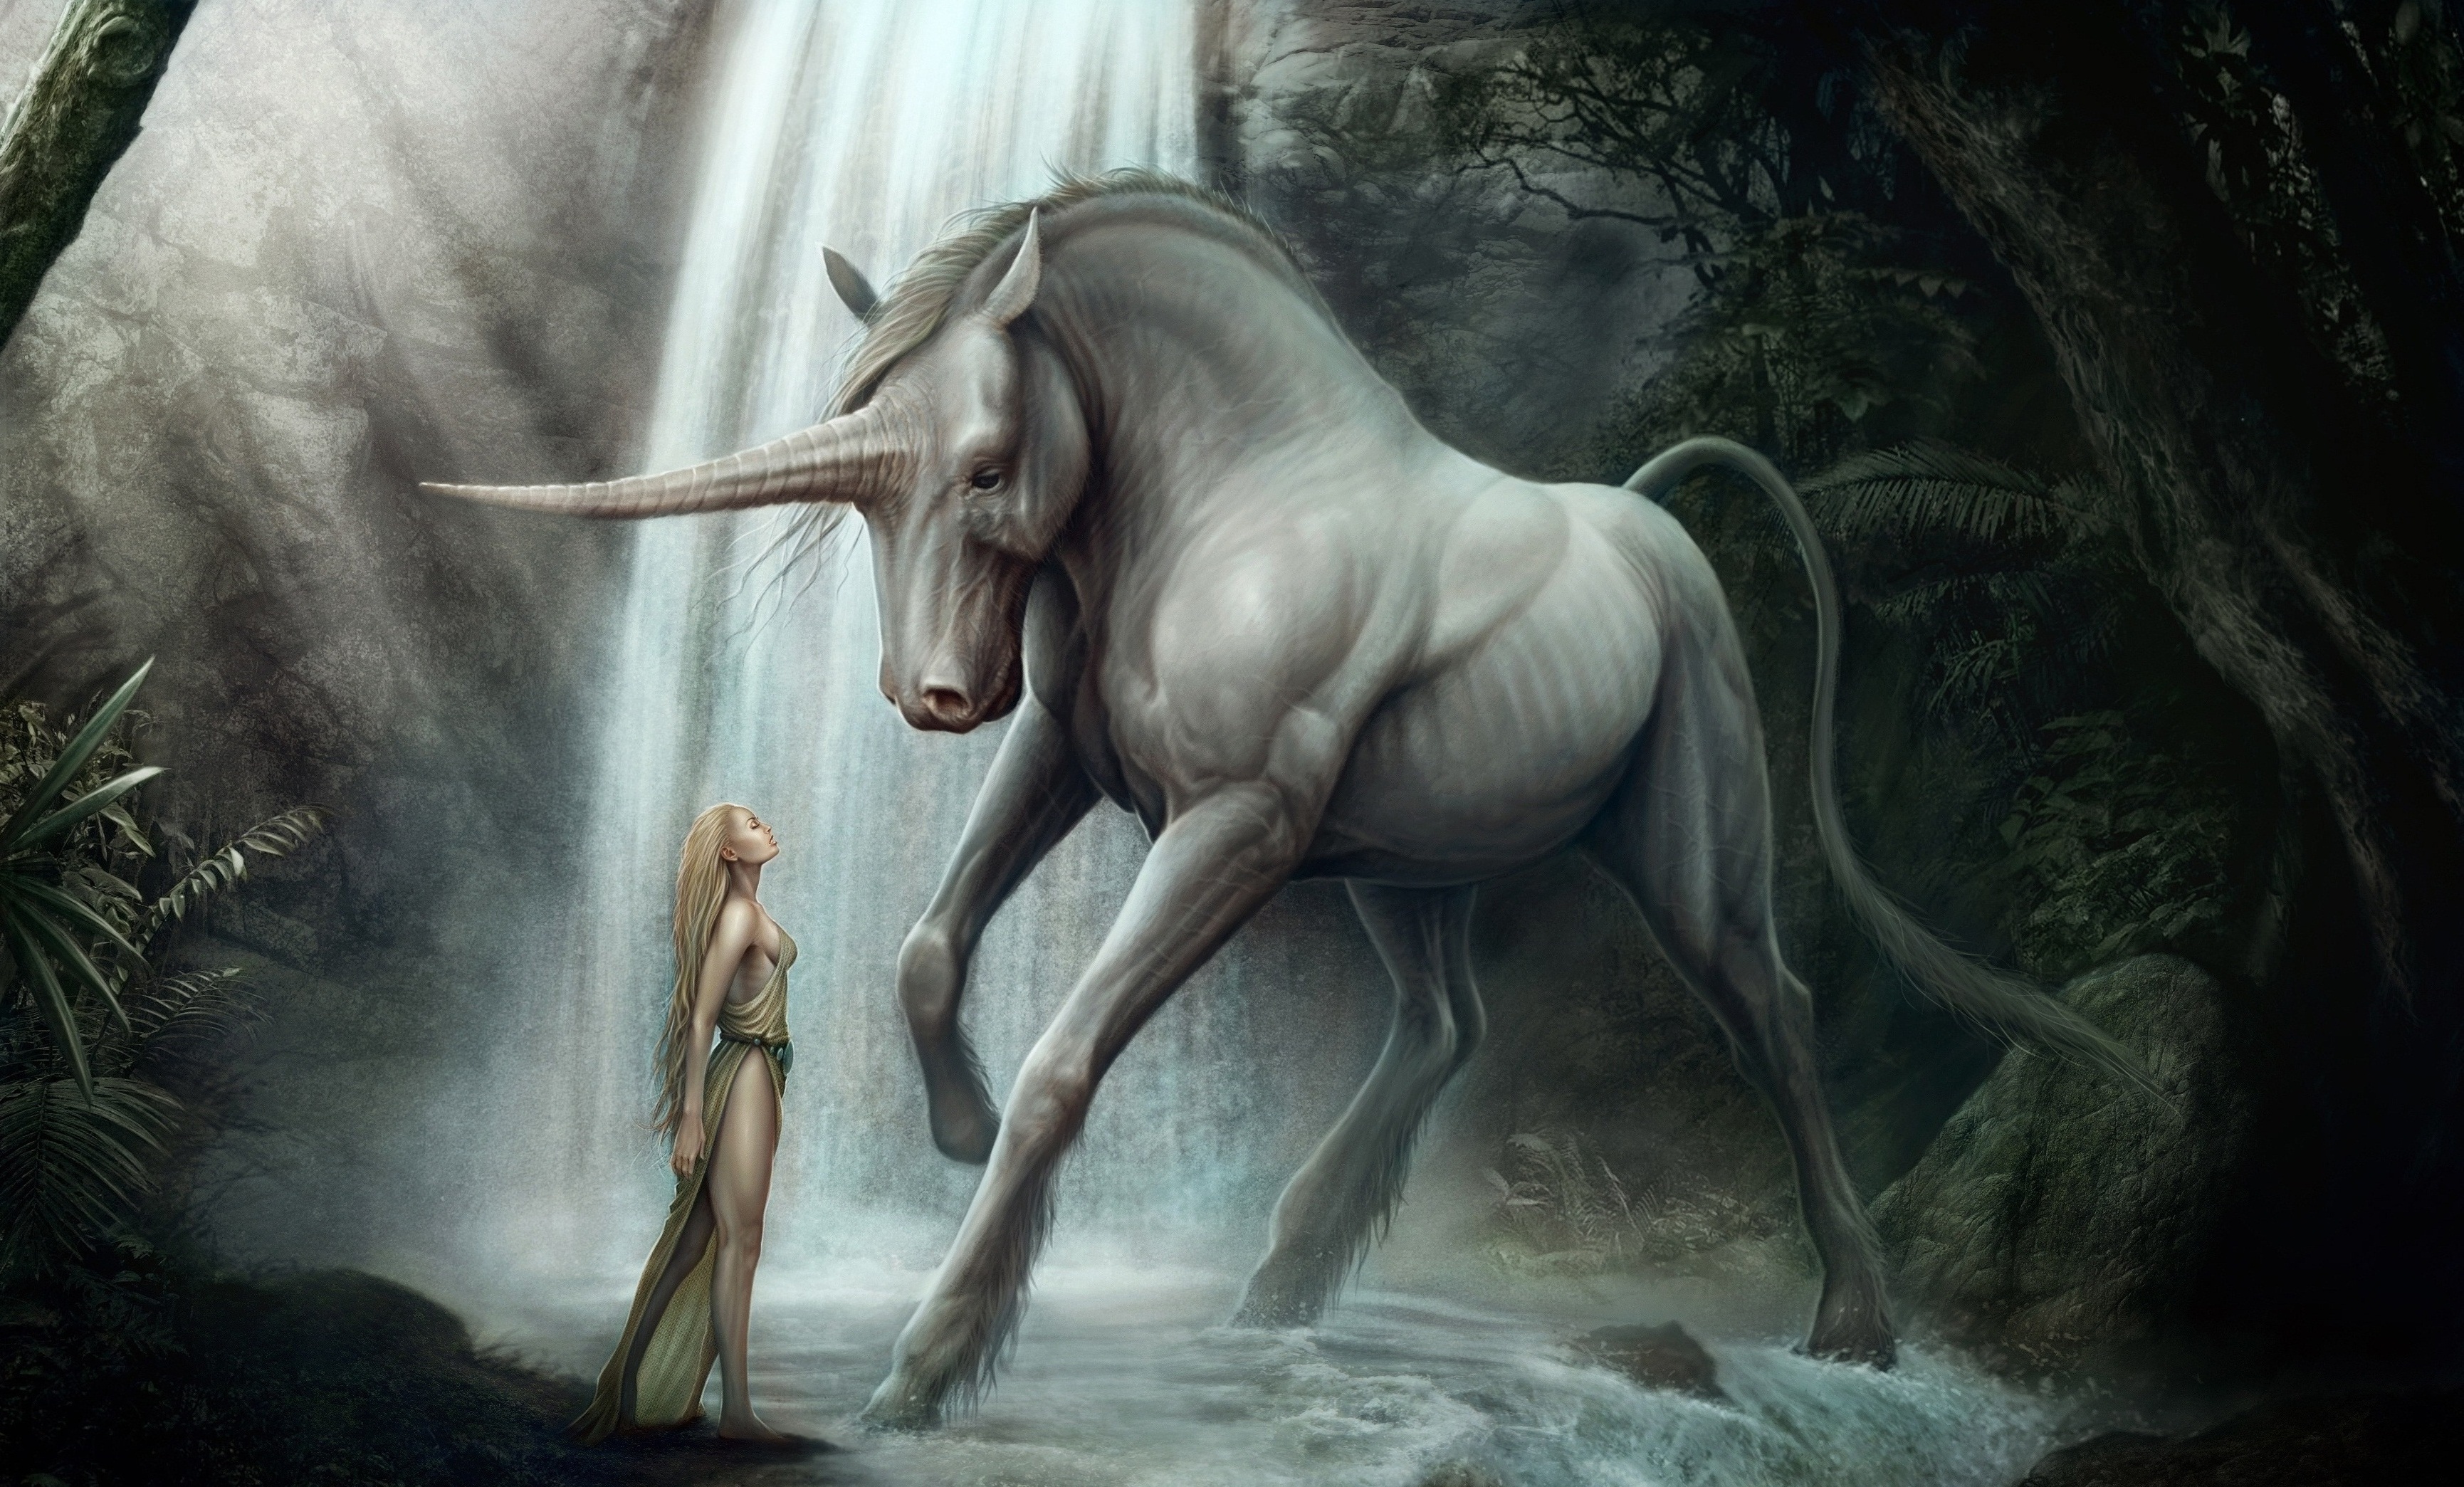 einhorn wallpaper,fictional character,mythical creature,unicorn,cg artwork,mythology